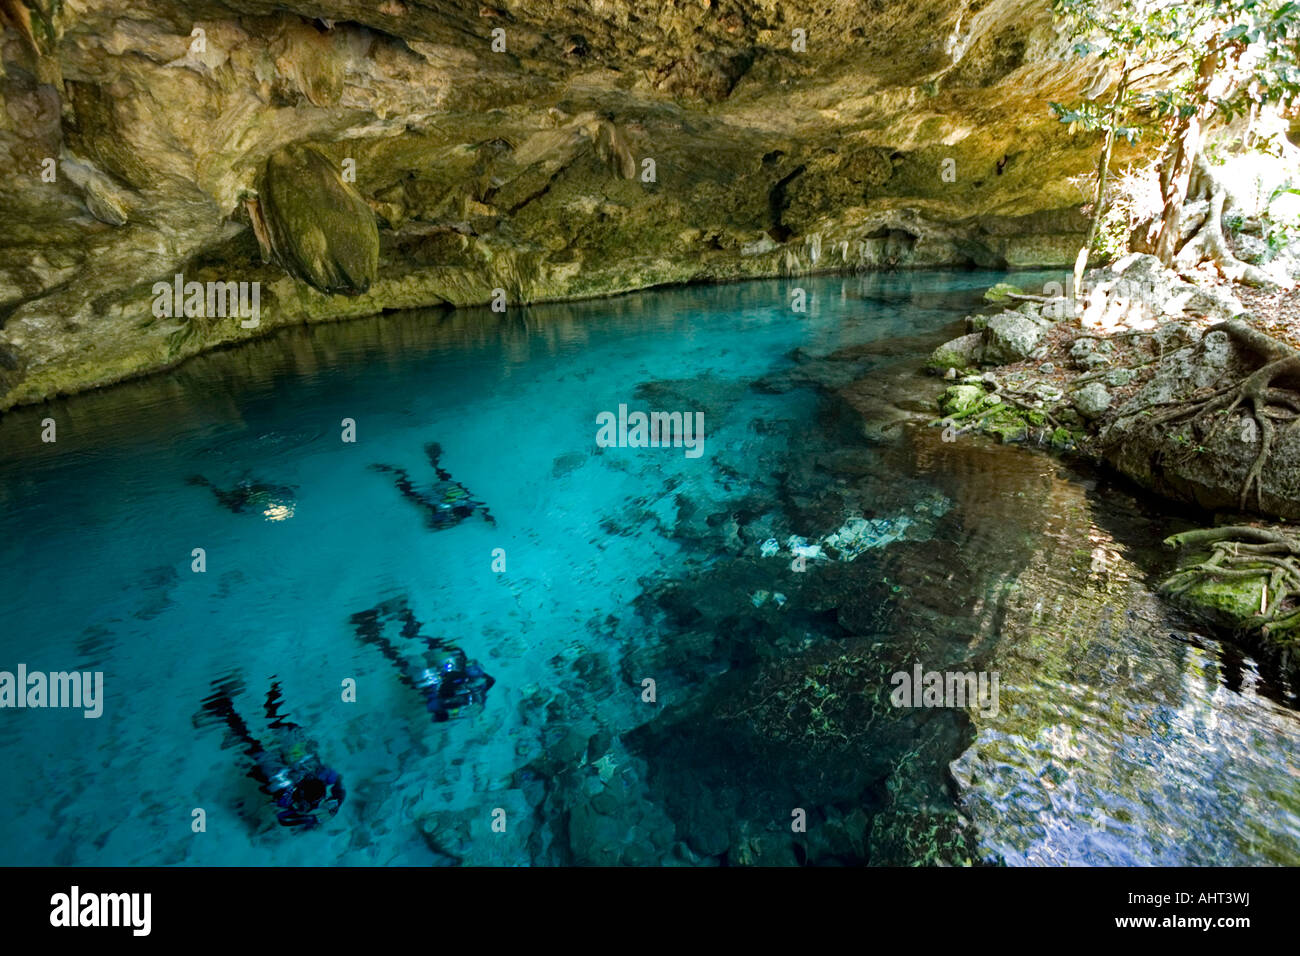 Quattro subacquei tenetevi pronti per esplorare un cenote (Messico). Quatre plongeurs sous marins explorant cénote ONU (Mexique). Foto Stock